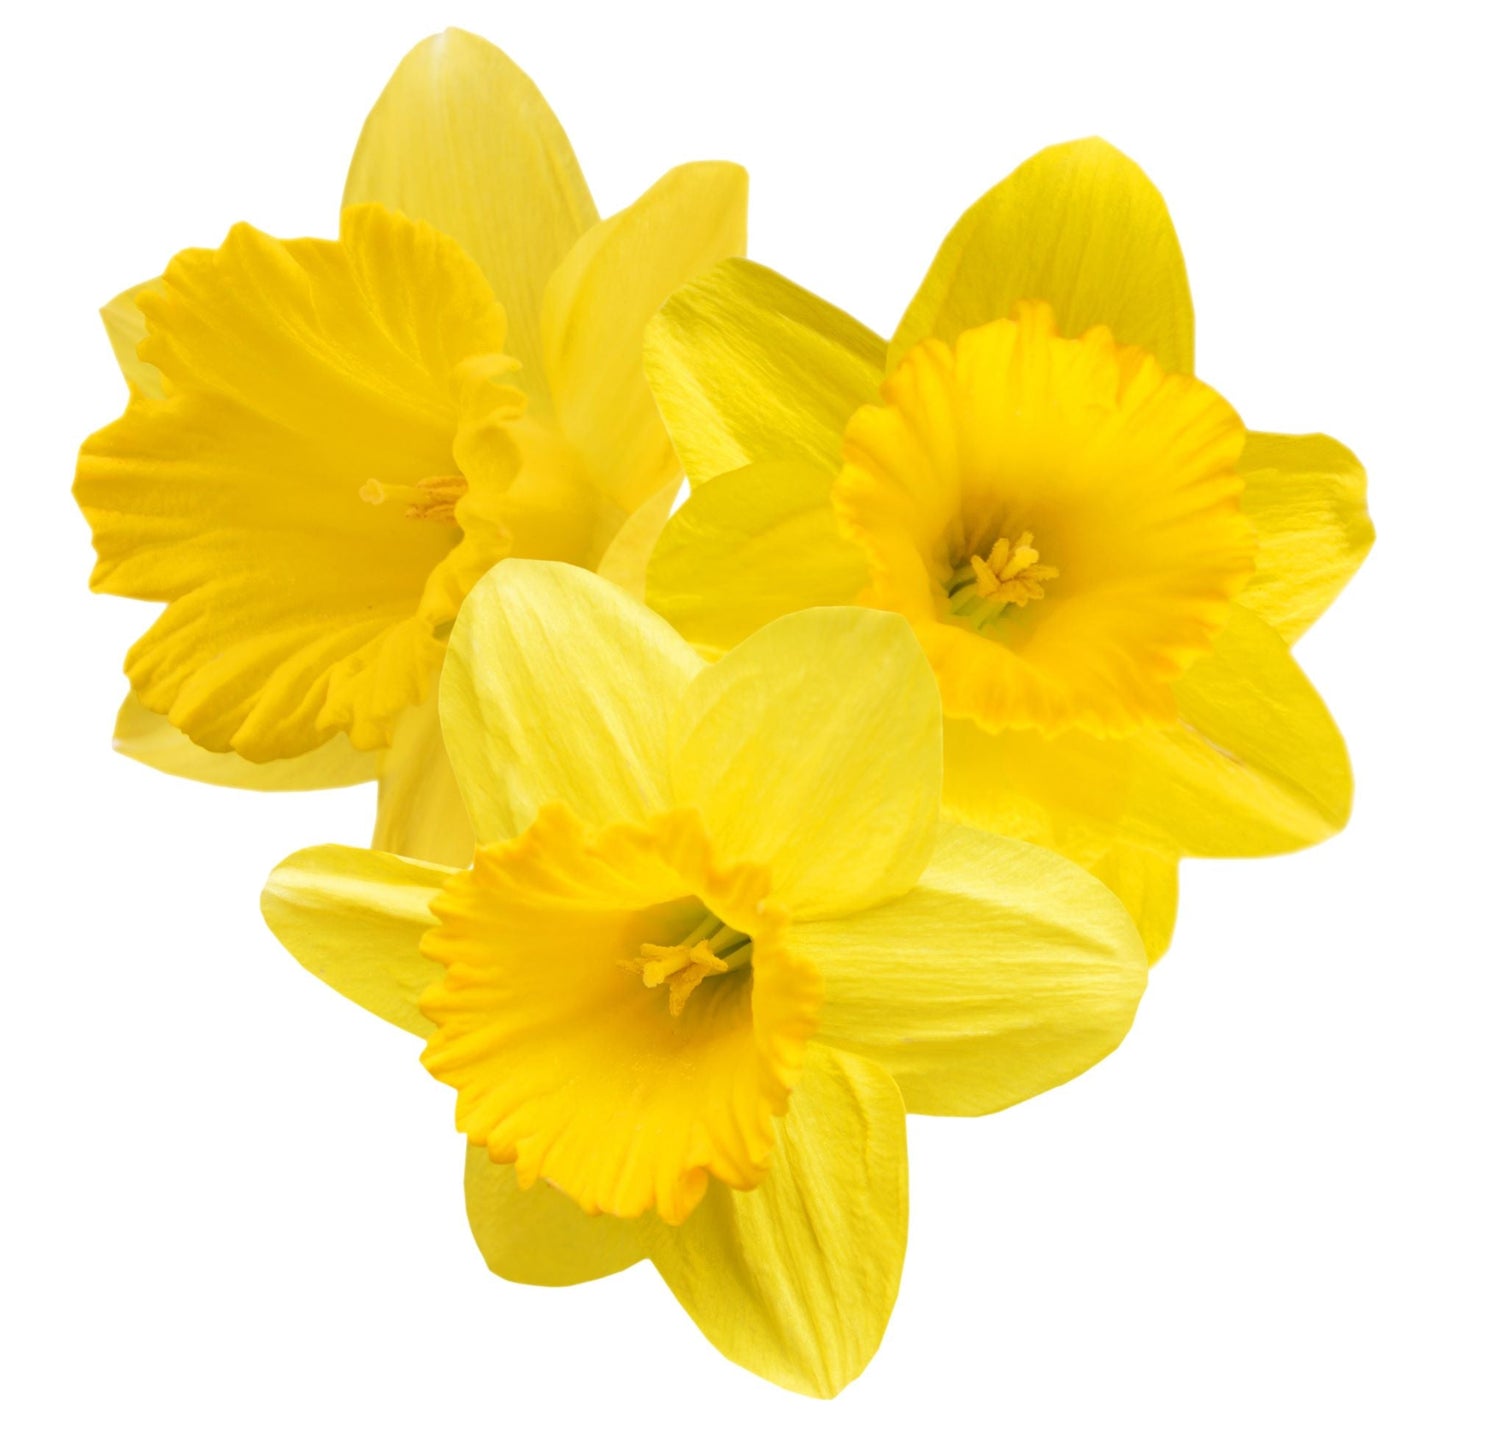 Yellow Daffodil 15 Bulbs - The Irish Gardener Store